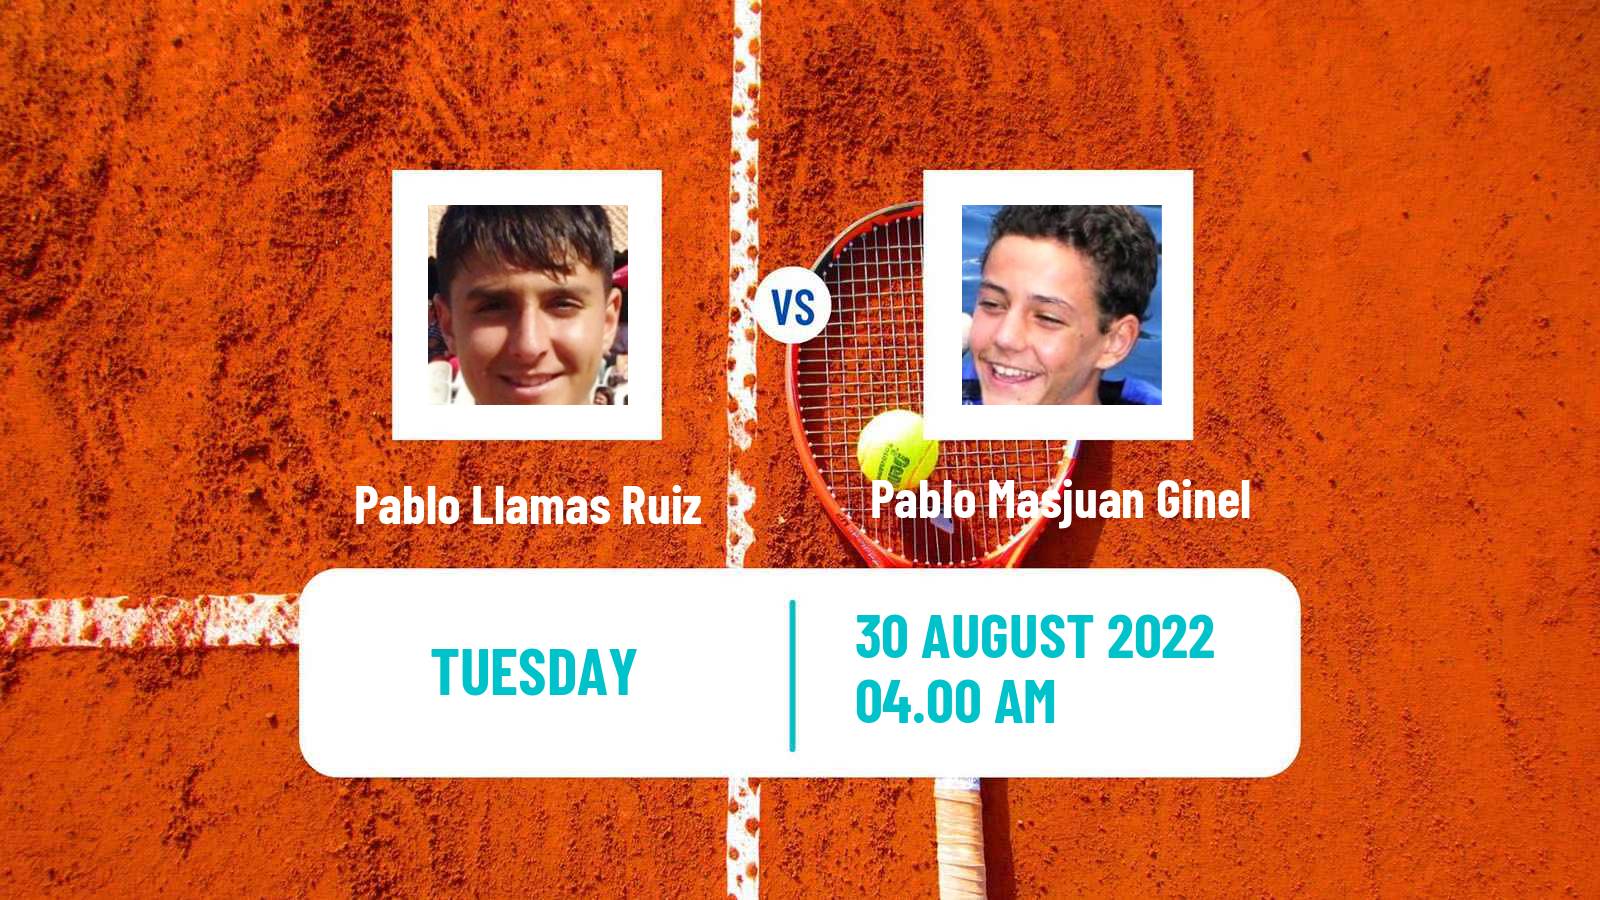 Tennis ITF Tournaments Pablo Llamas Ruiz - Pablo Masjuan Ginel